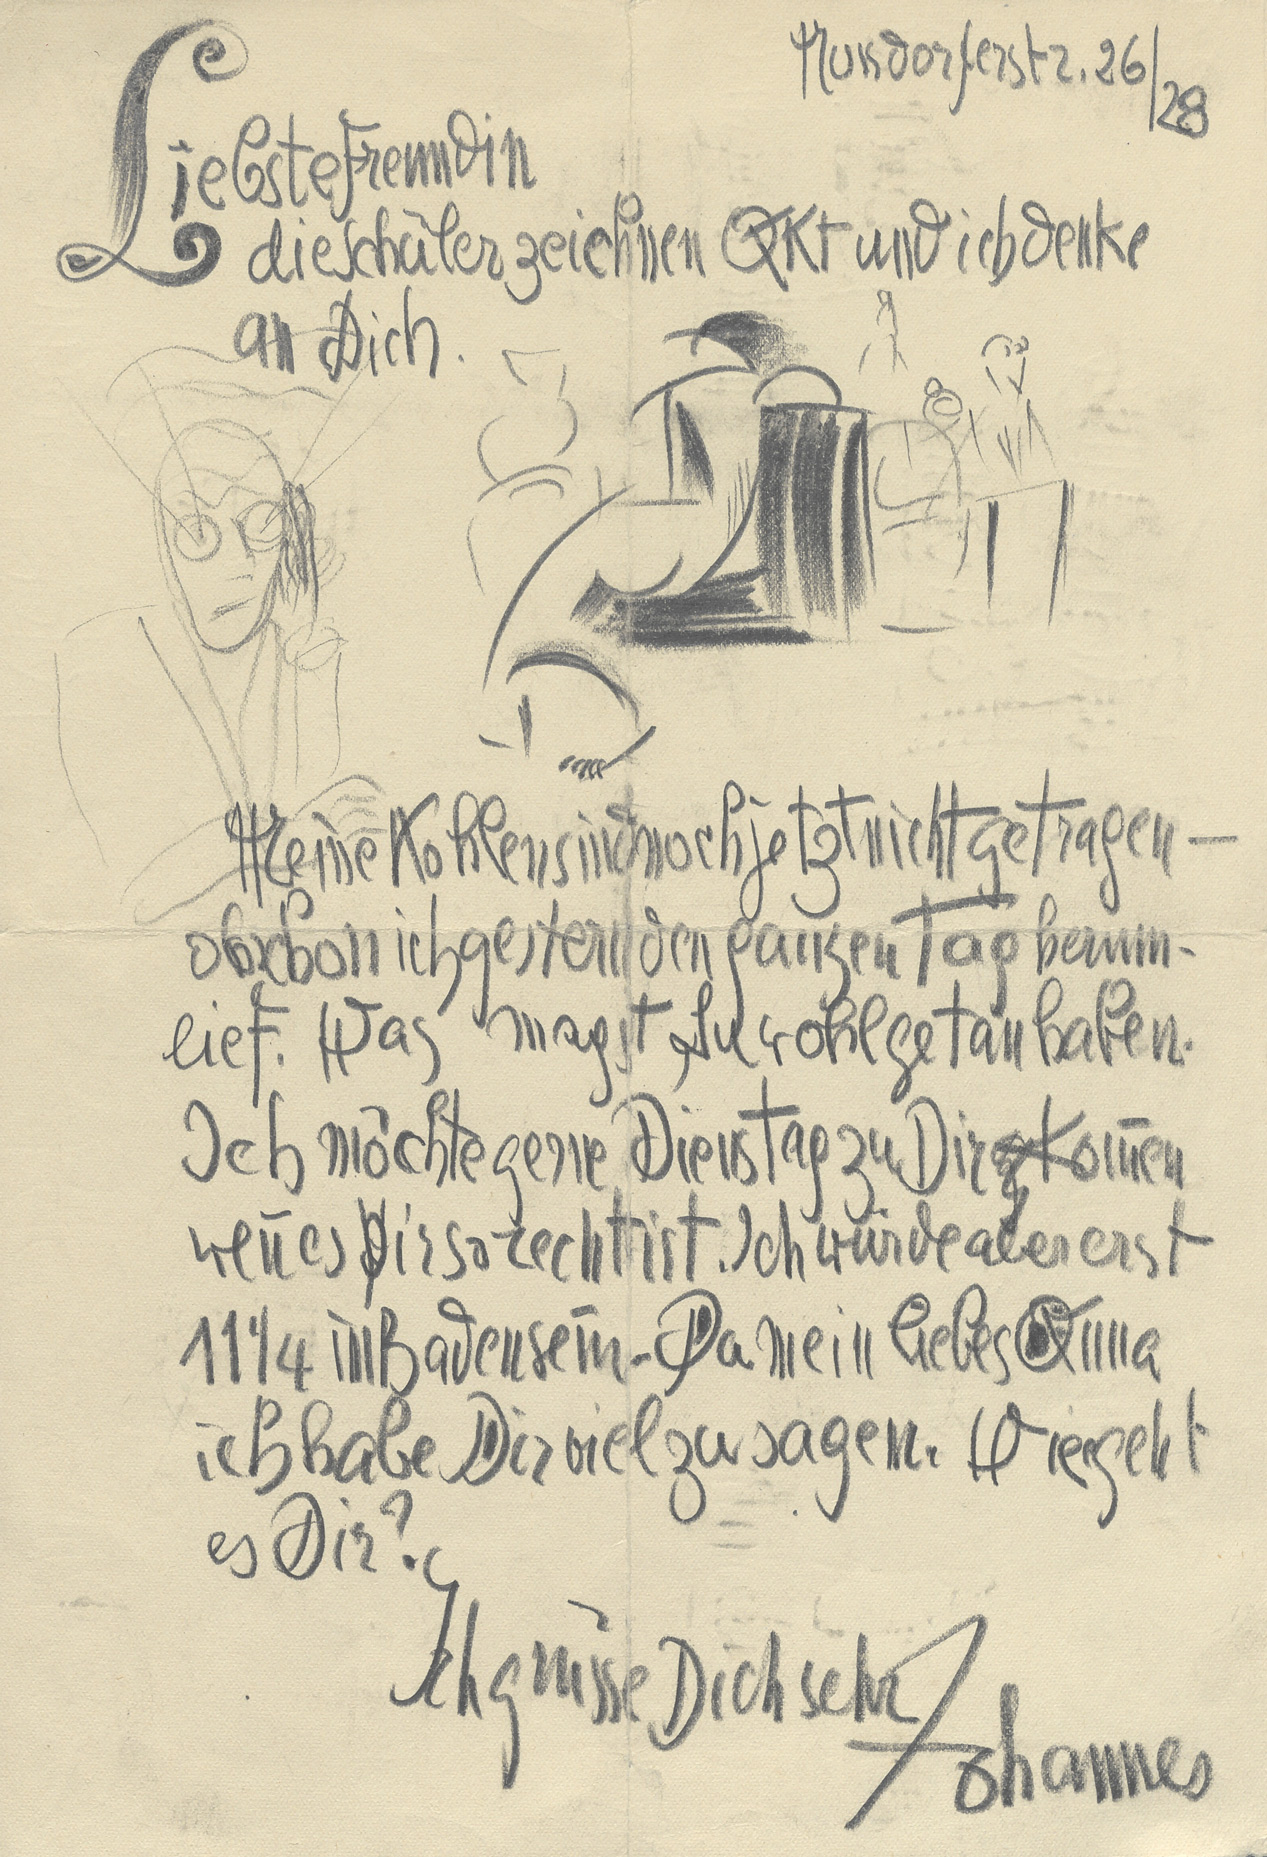 Letter from Johannes Itten to his pupil and muse Anna Höllering, Vienna, 1917 (Hs NL 11: Eb 1.6; <a href="https://doi.org/10.7891/e-manuscripta-154054">Digitalisat</a>)